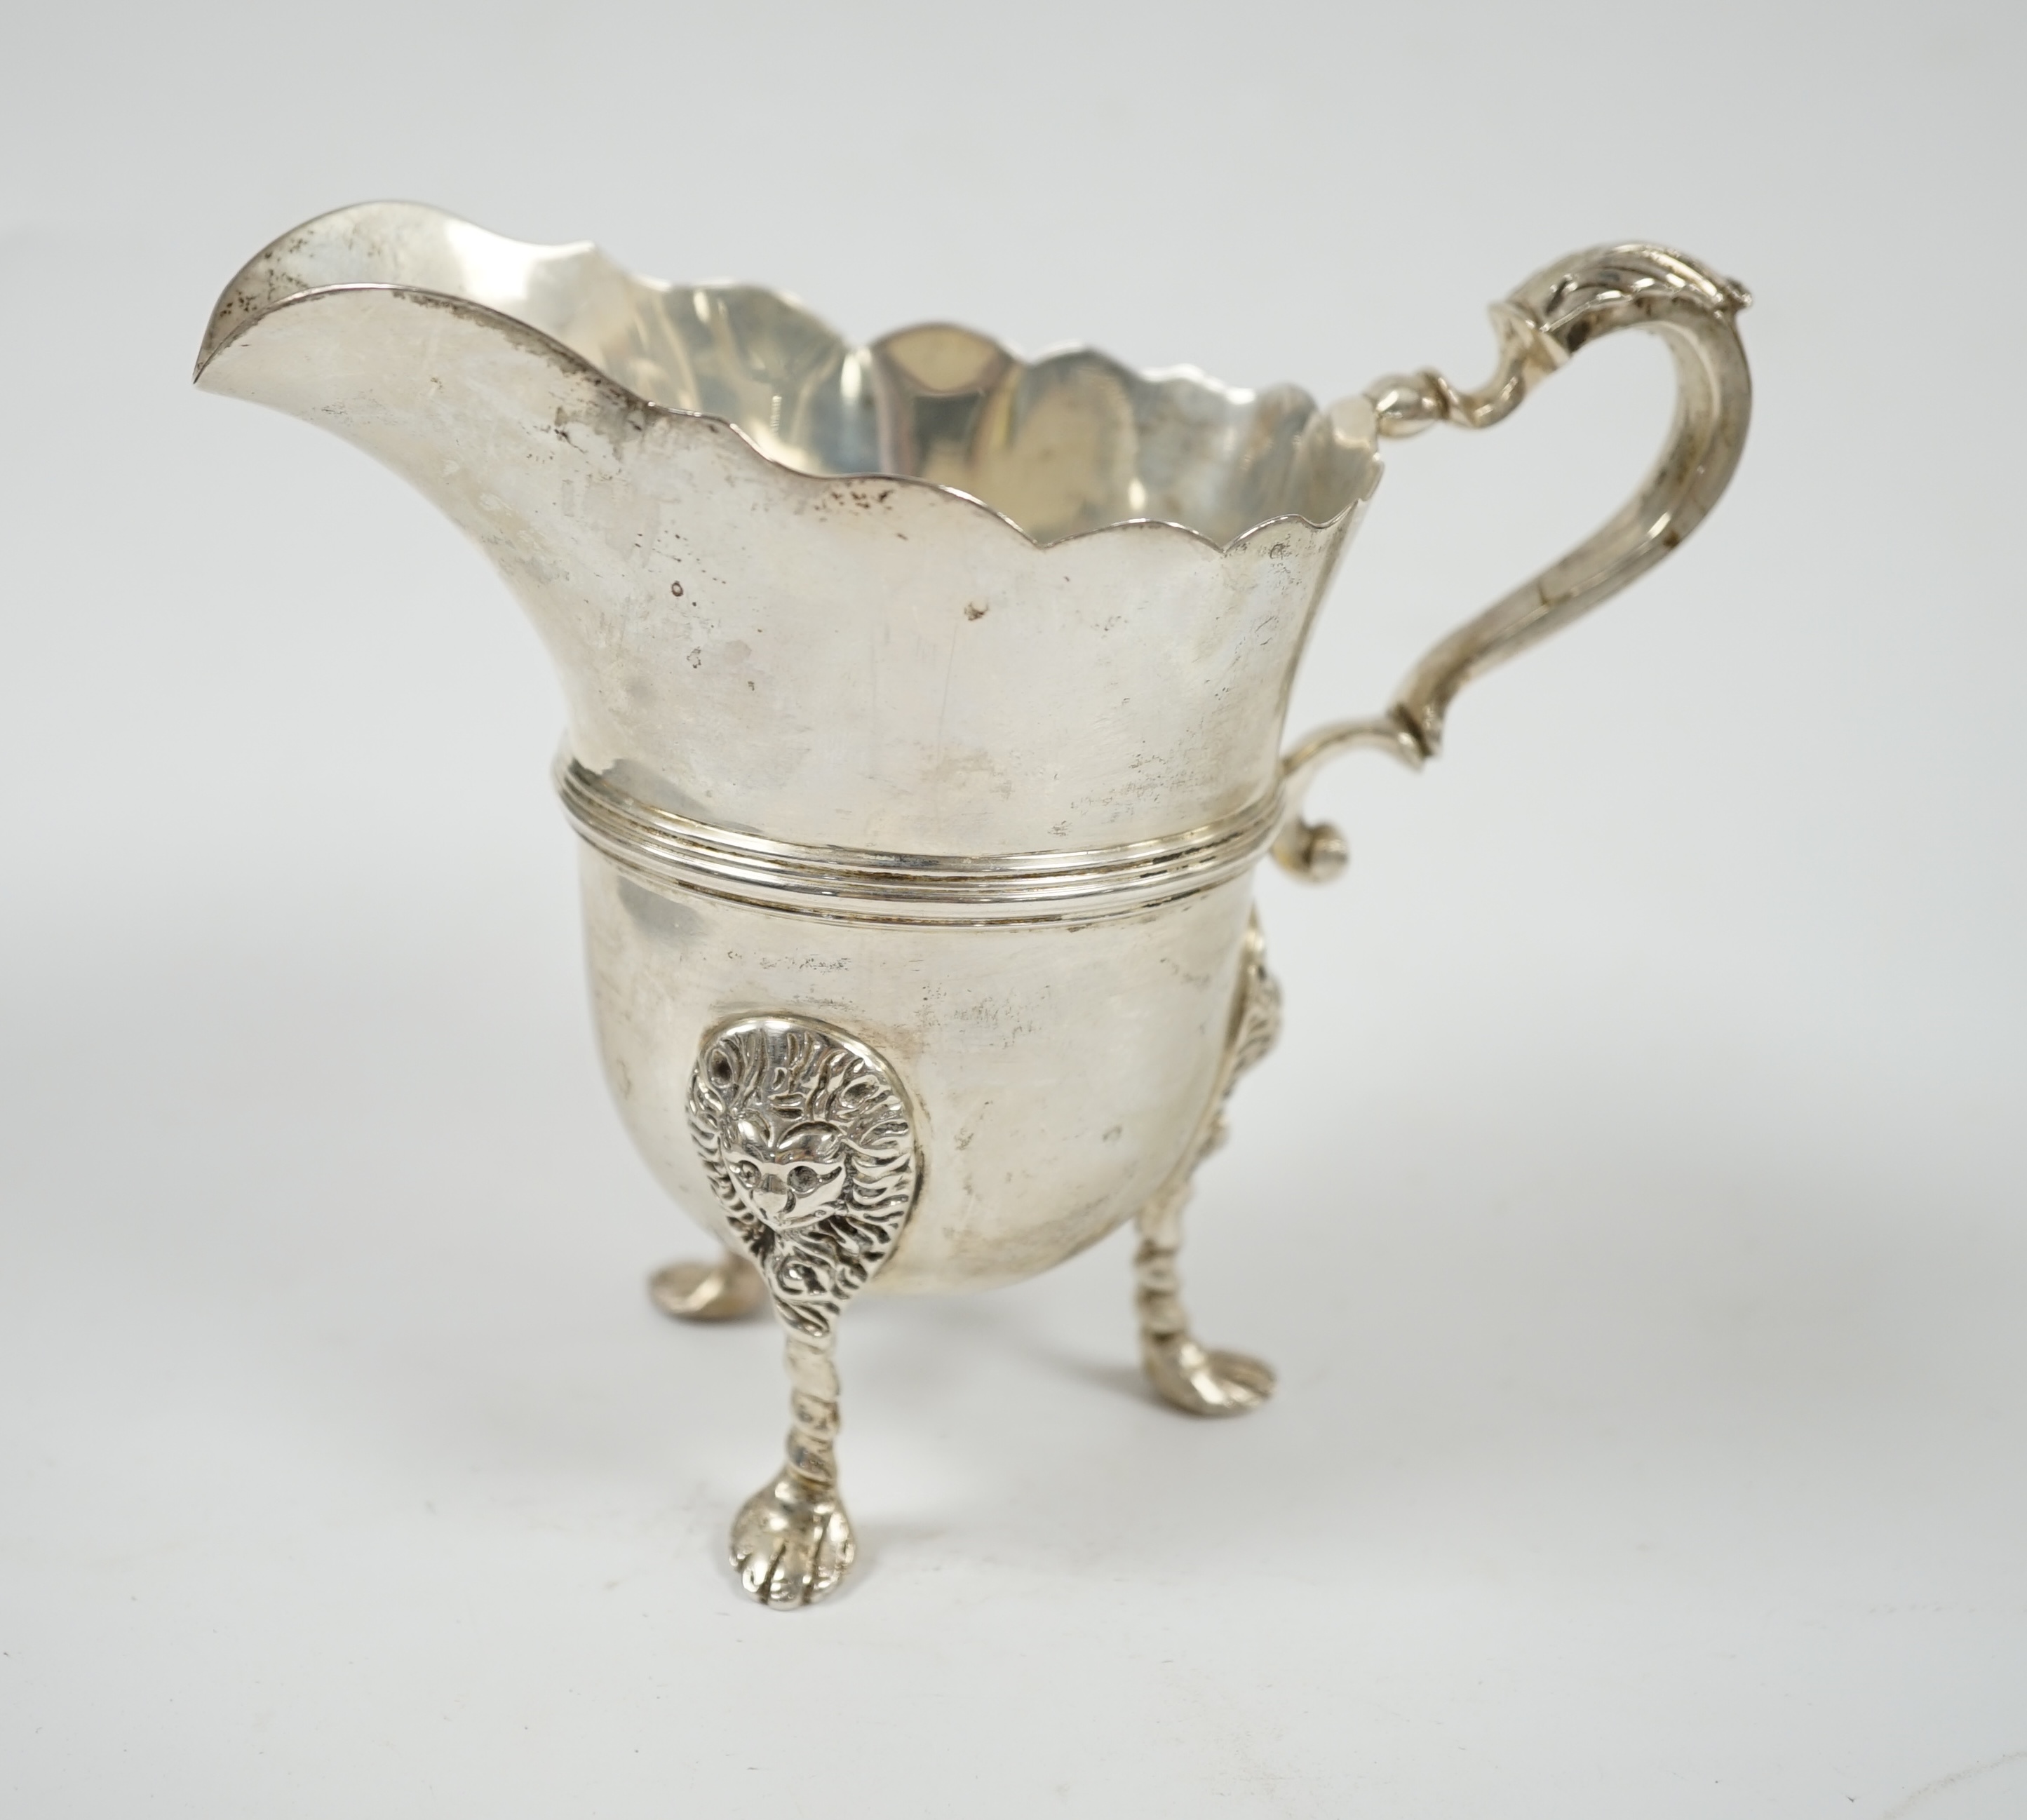 A George V silver cream jug, London 1911, height 11.5cm, 8.1oz. Condition - fair to good